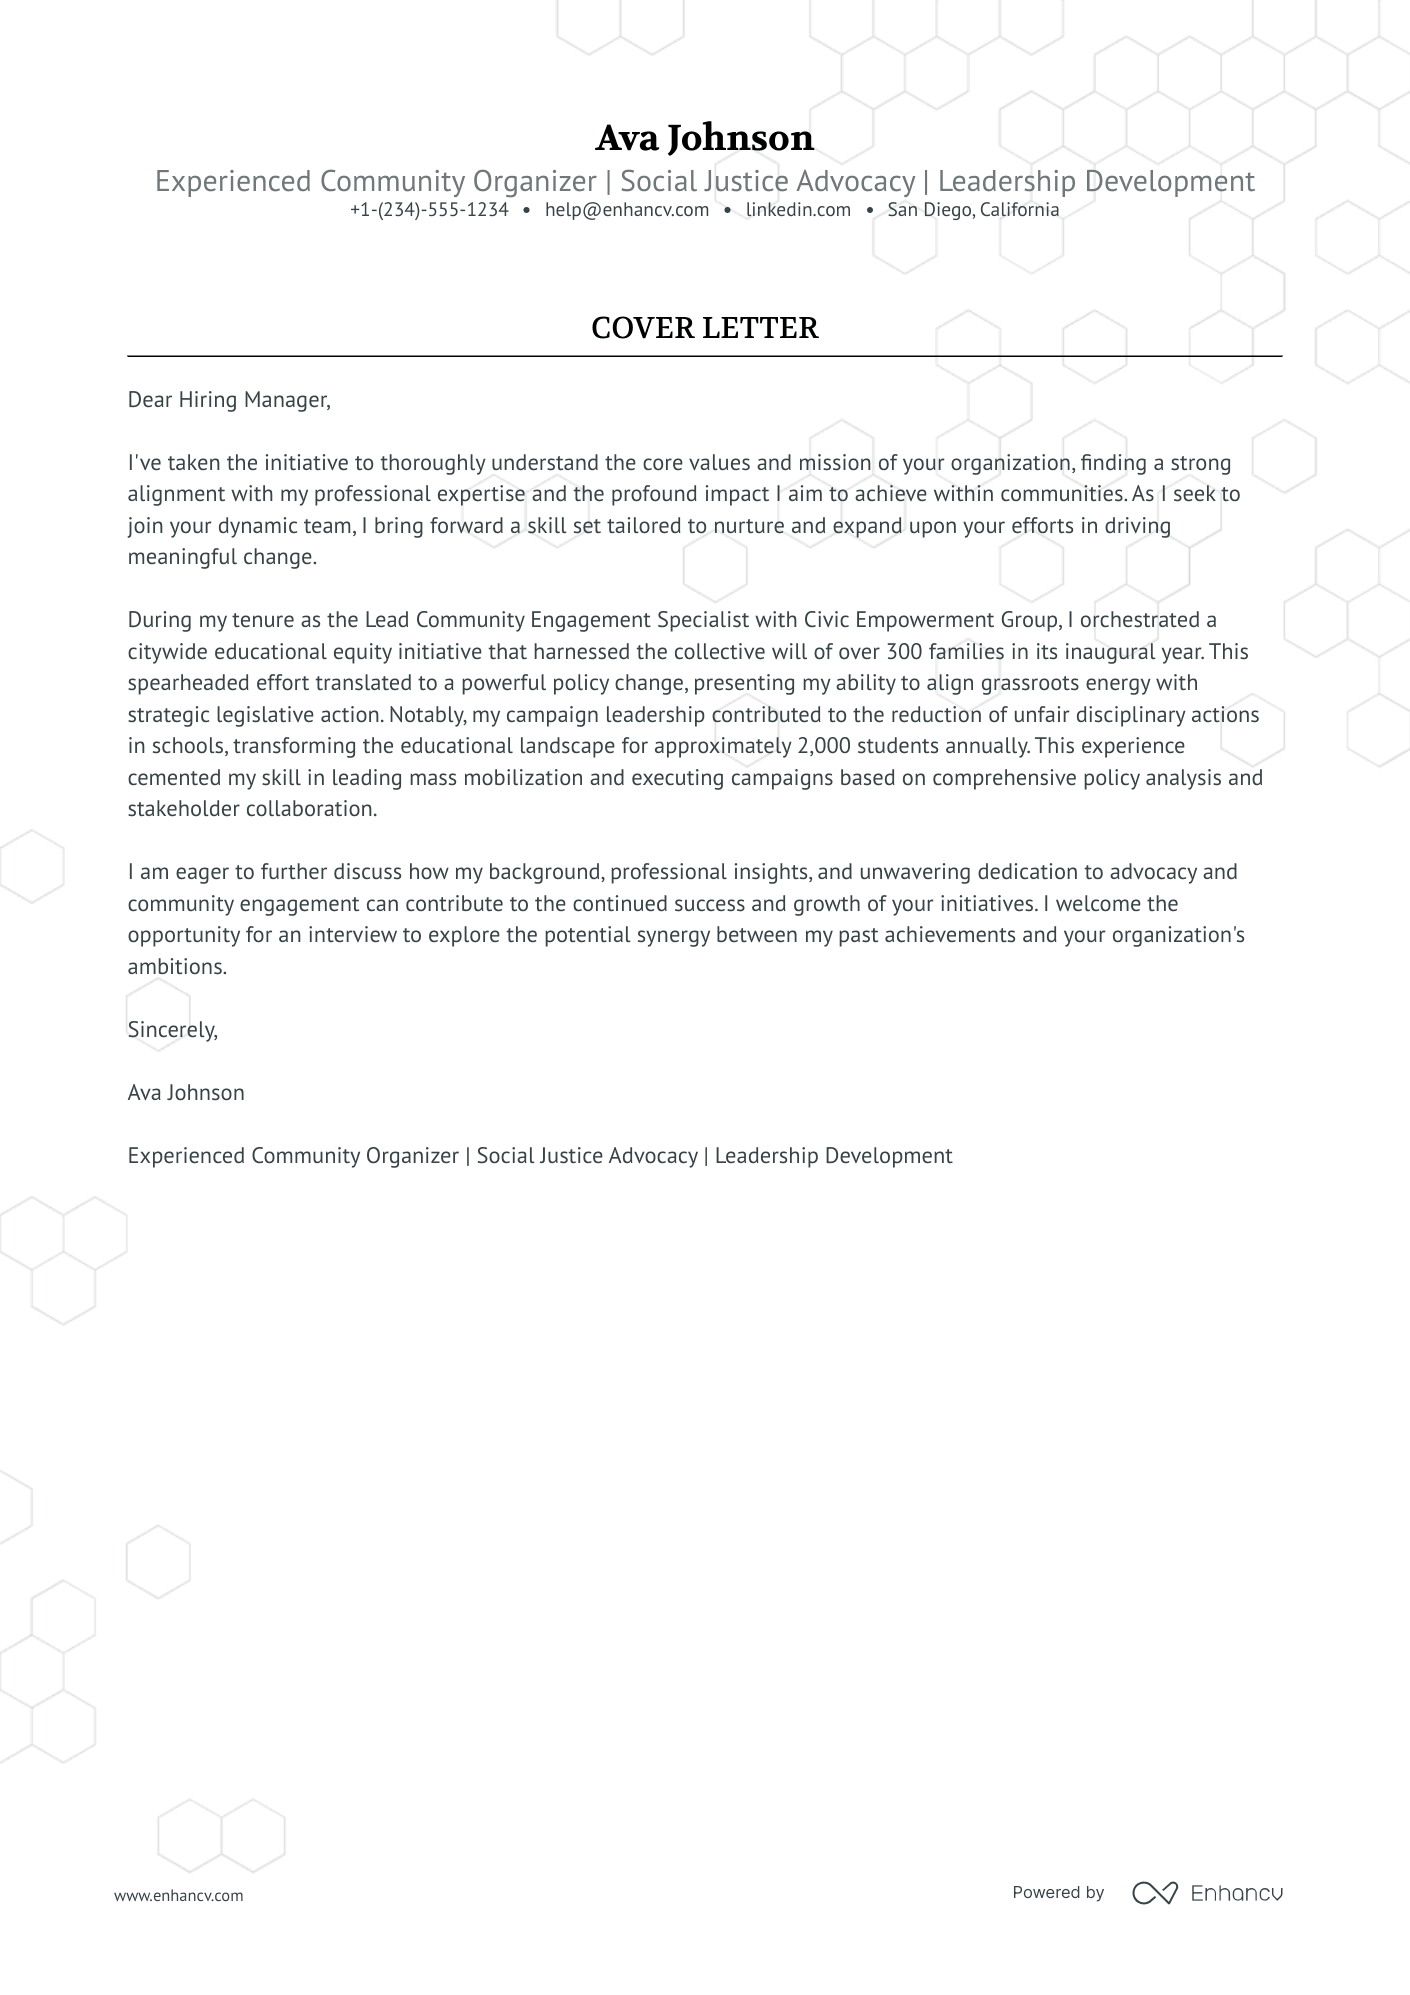 Community Organizer cover letter